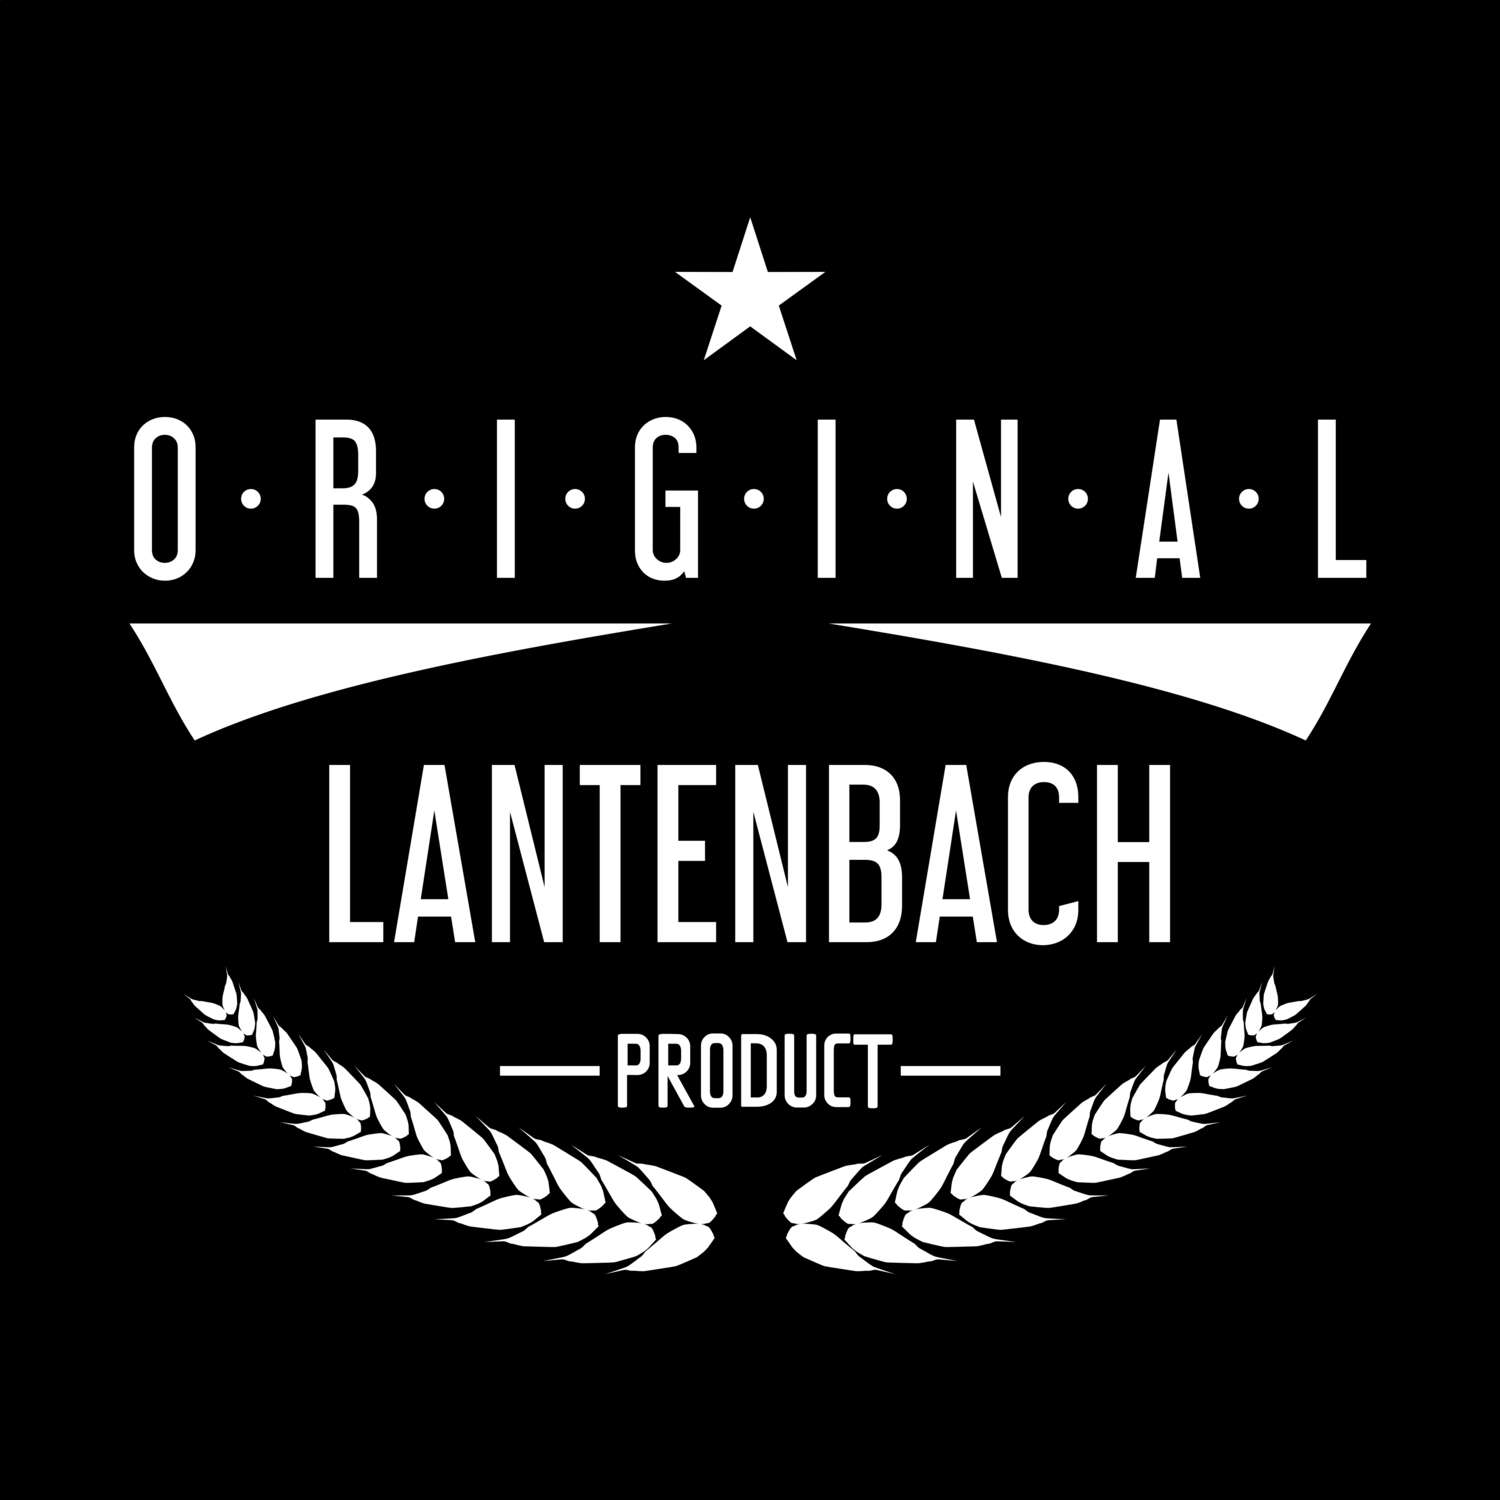 Lantenbach T-Shirt »Original Product«